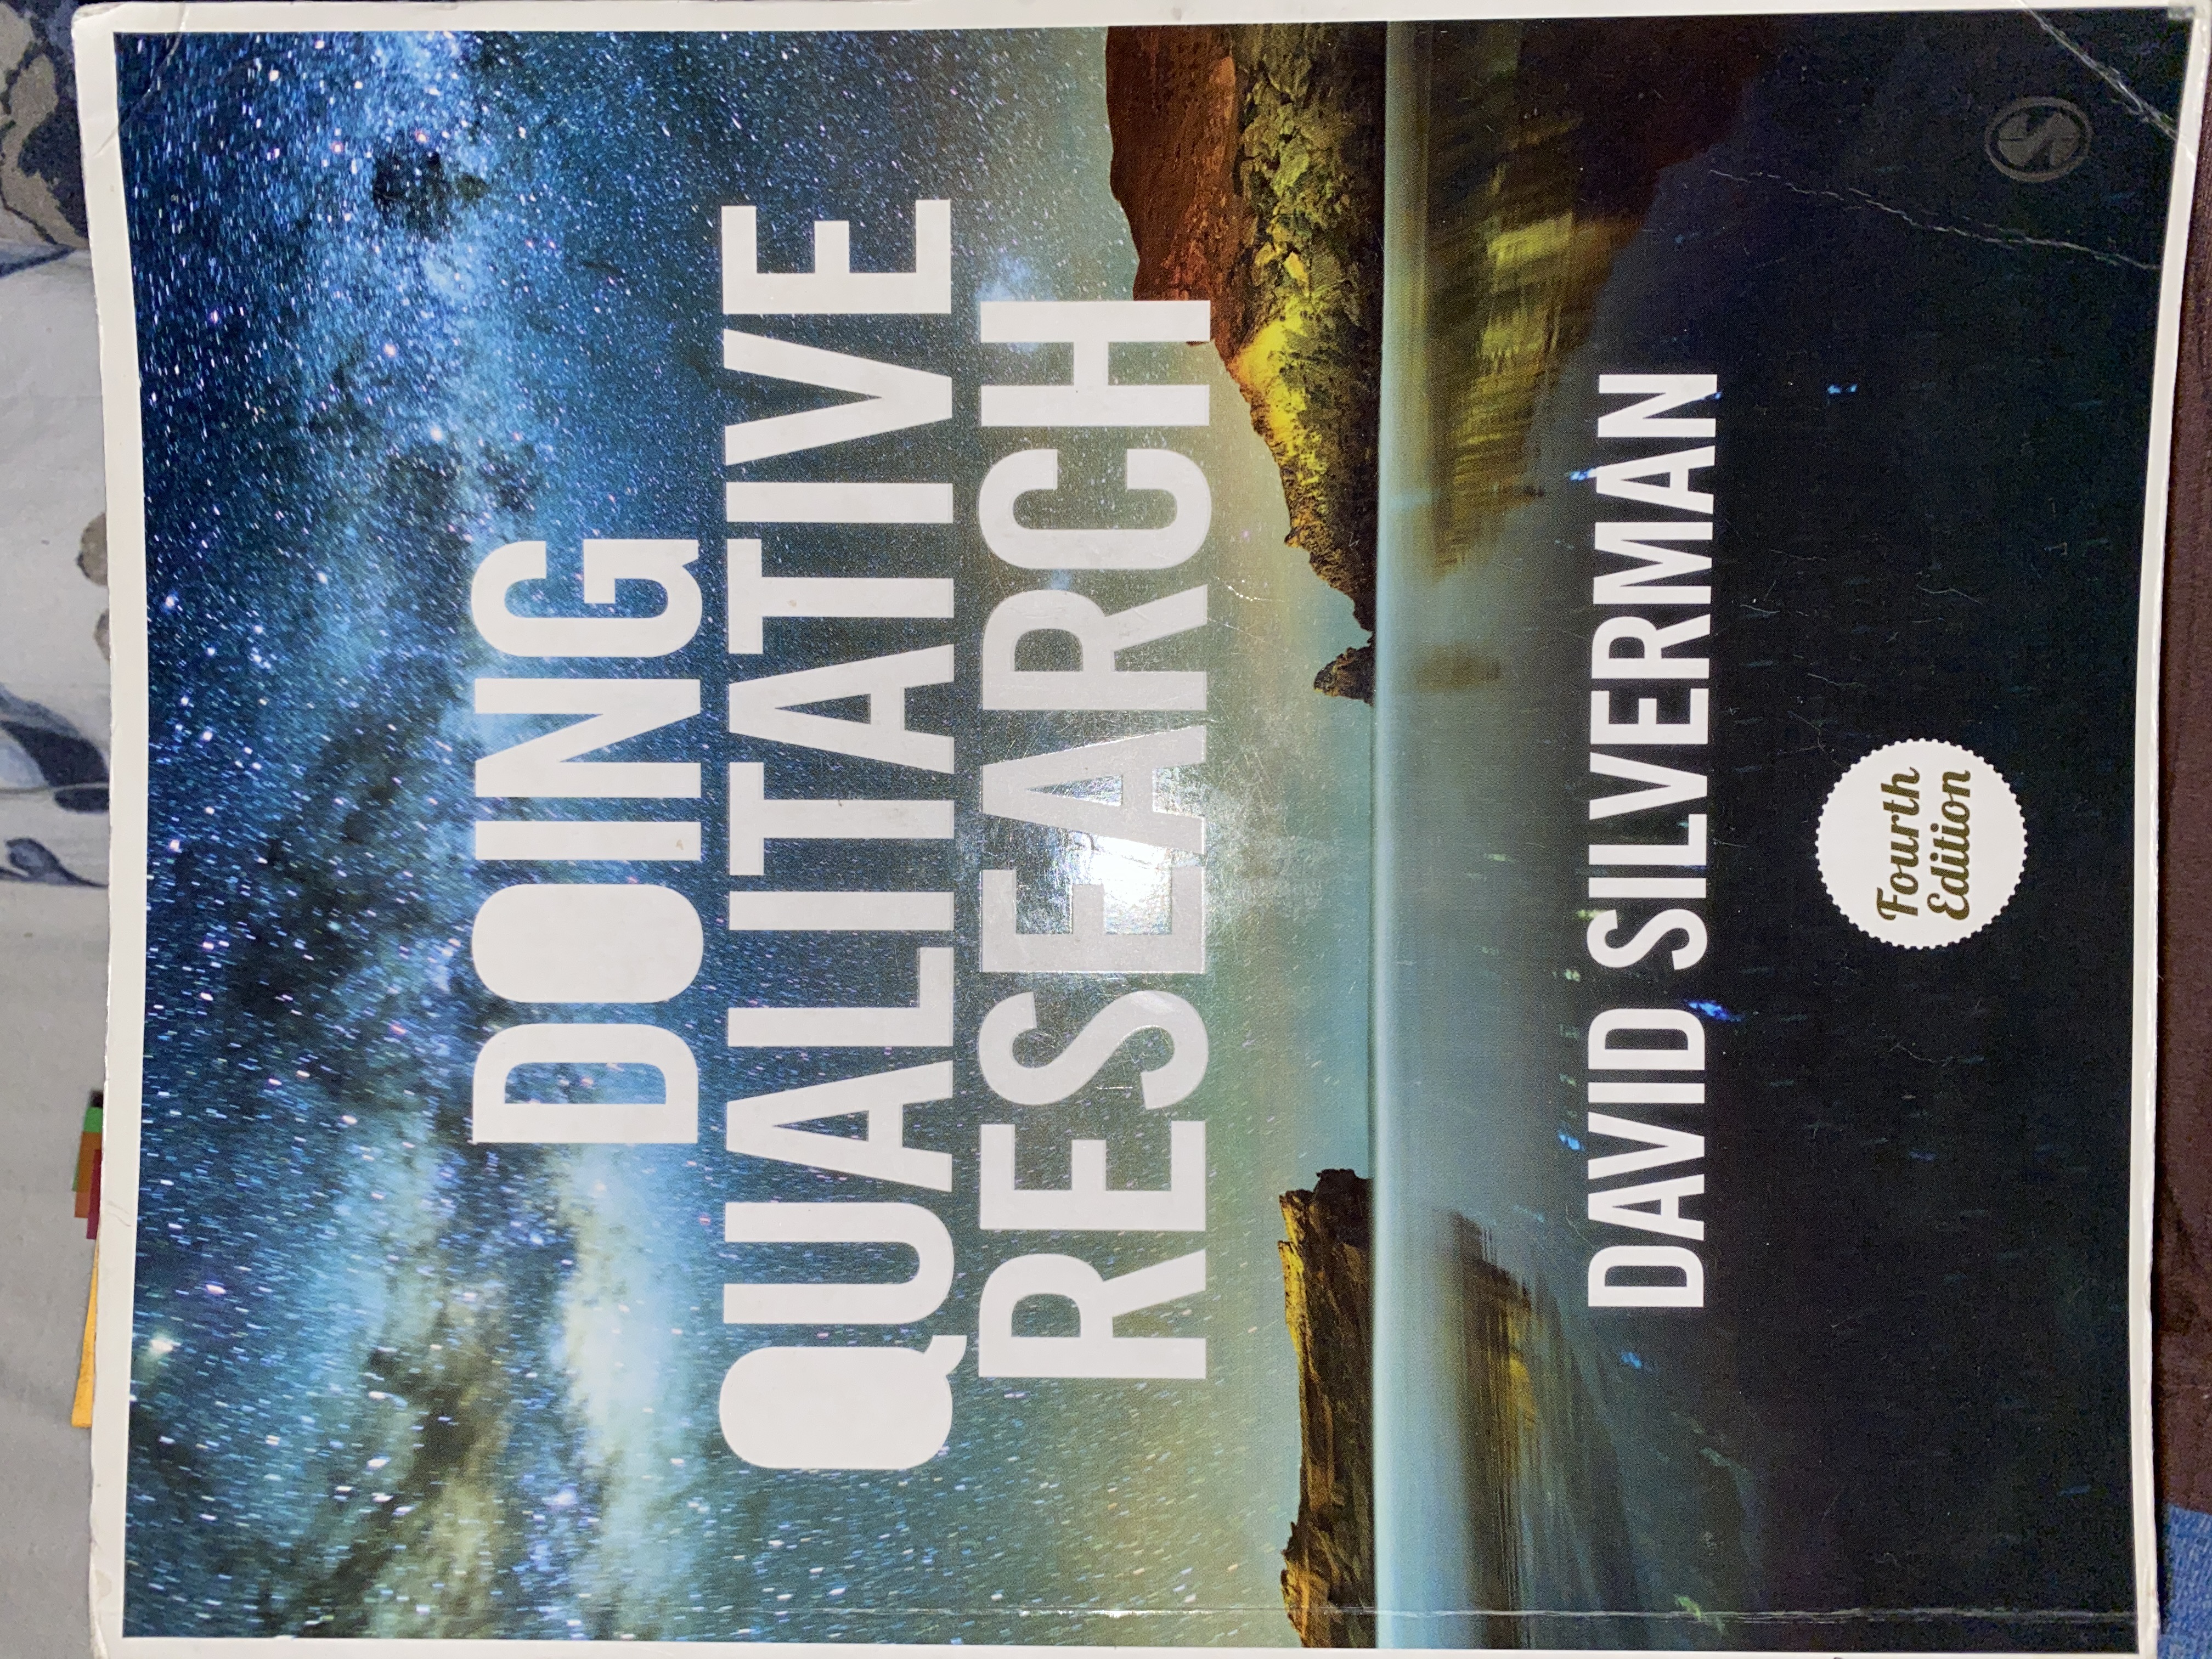 Doing Qualitative Research: A Practical Handbook; David Silverman; 2013